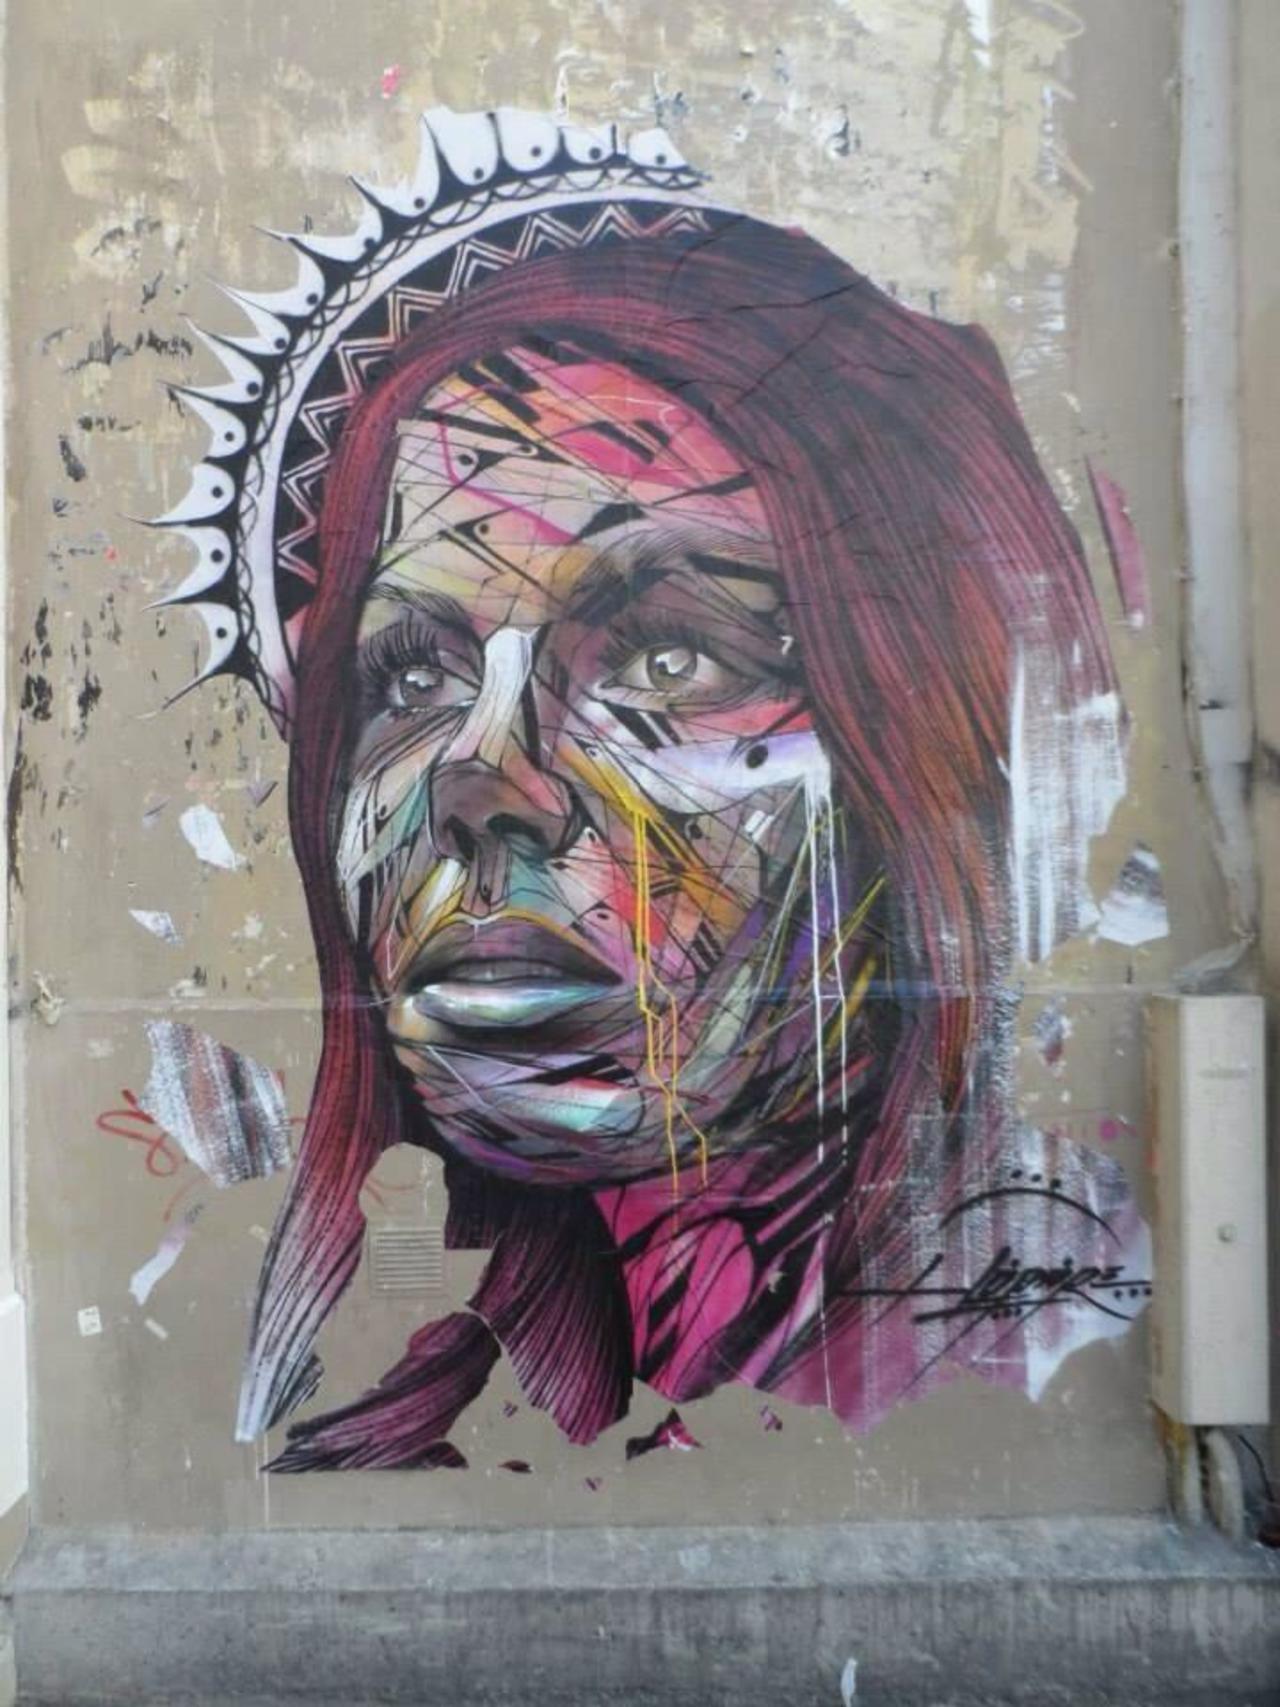 Artist Hopare new signature Street Art portrait located in Paris, France #art #mural #graffiti #streetart http://t.co/lKvSAa2PIh